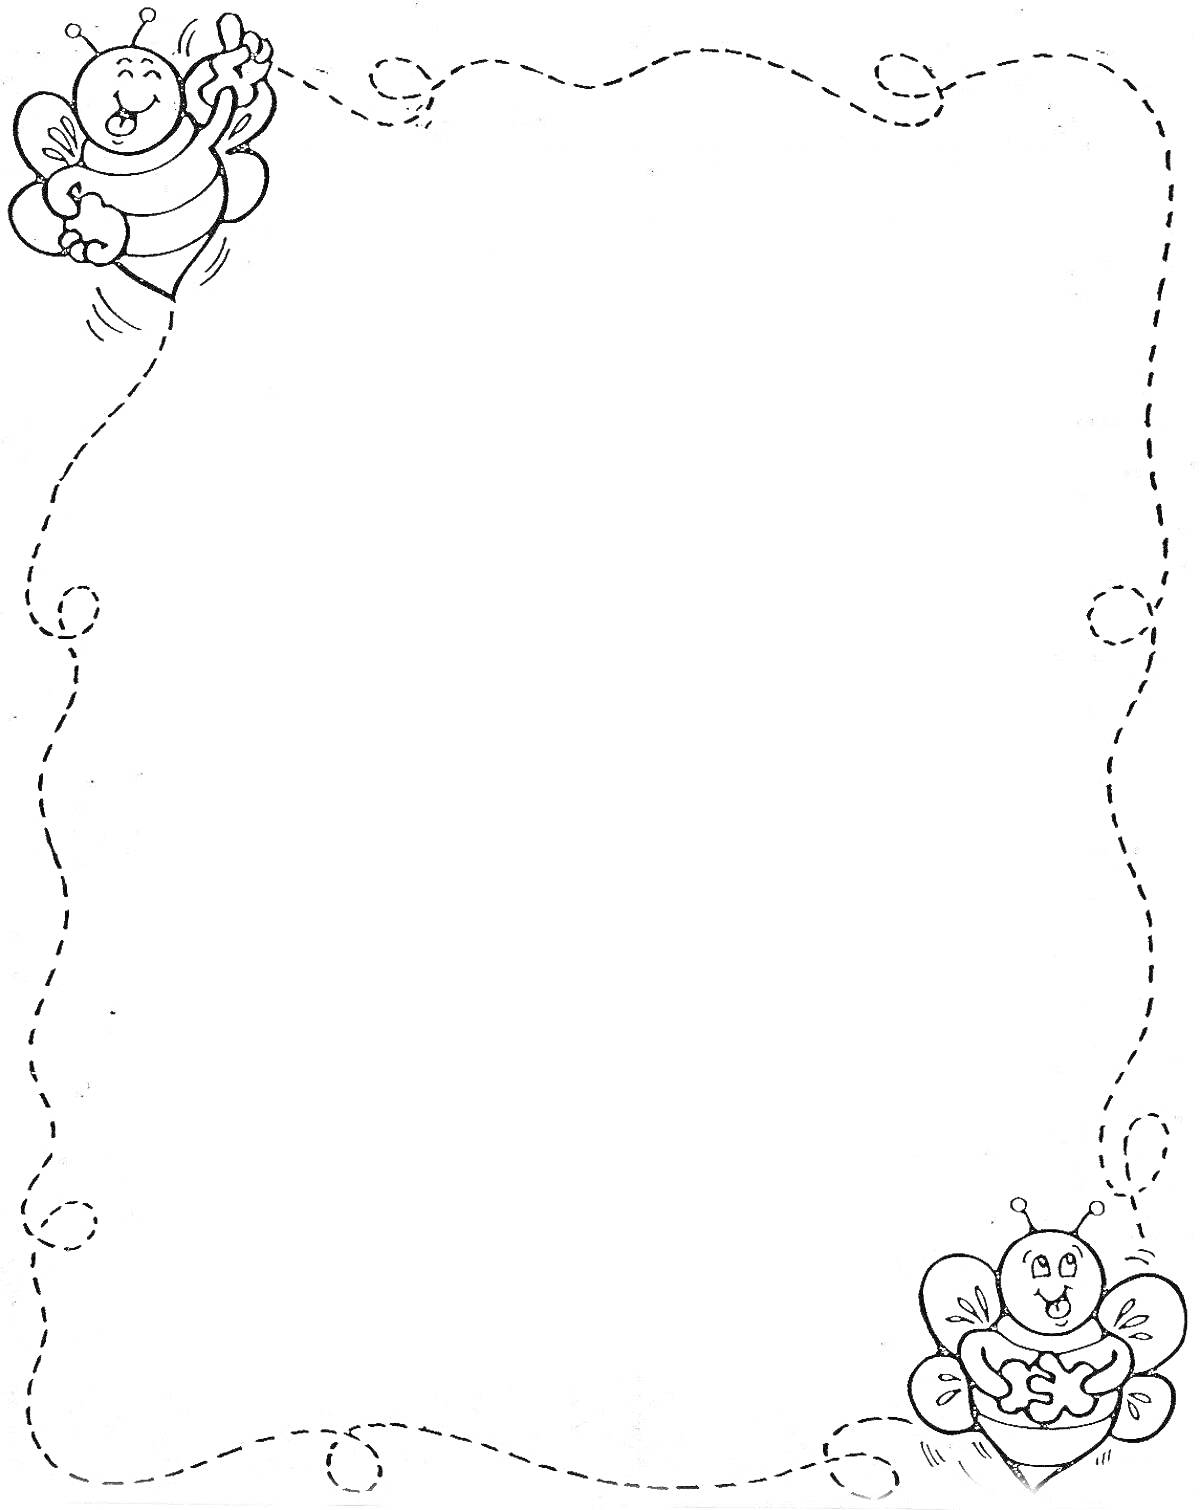 Раскраска рамка для текста с изображением пчелки и бабочки